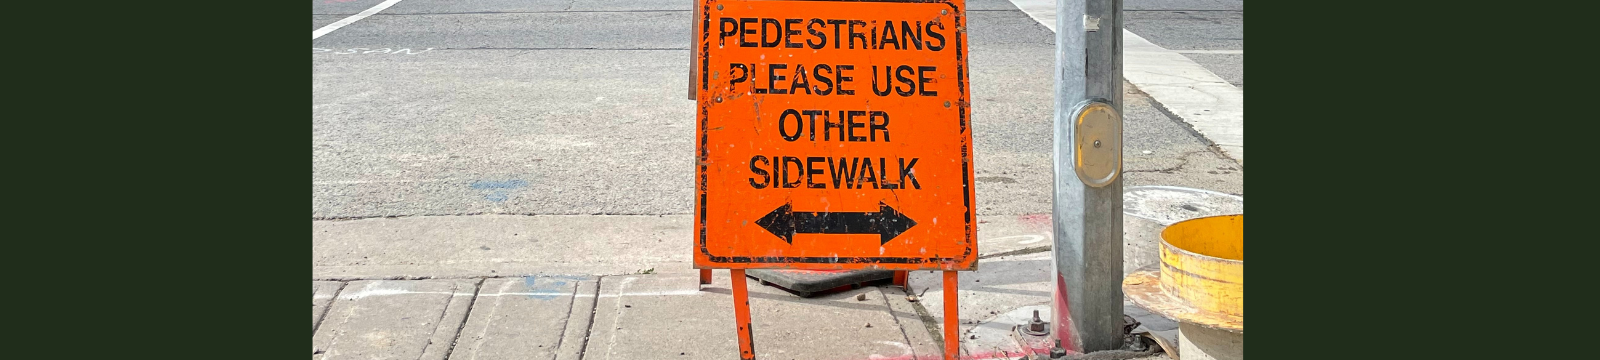 Sign indicating a sidewalk closure.